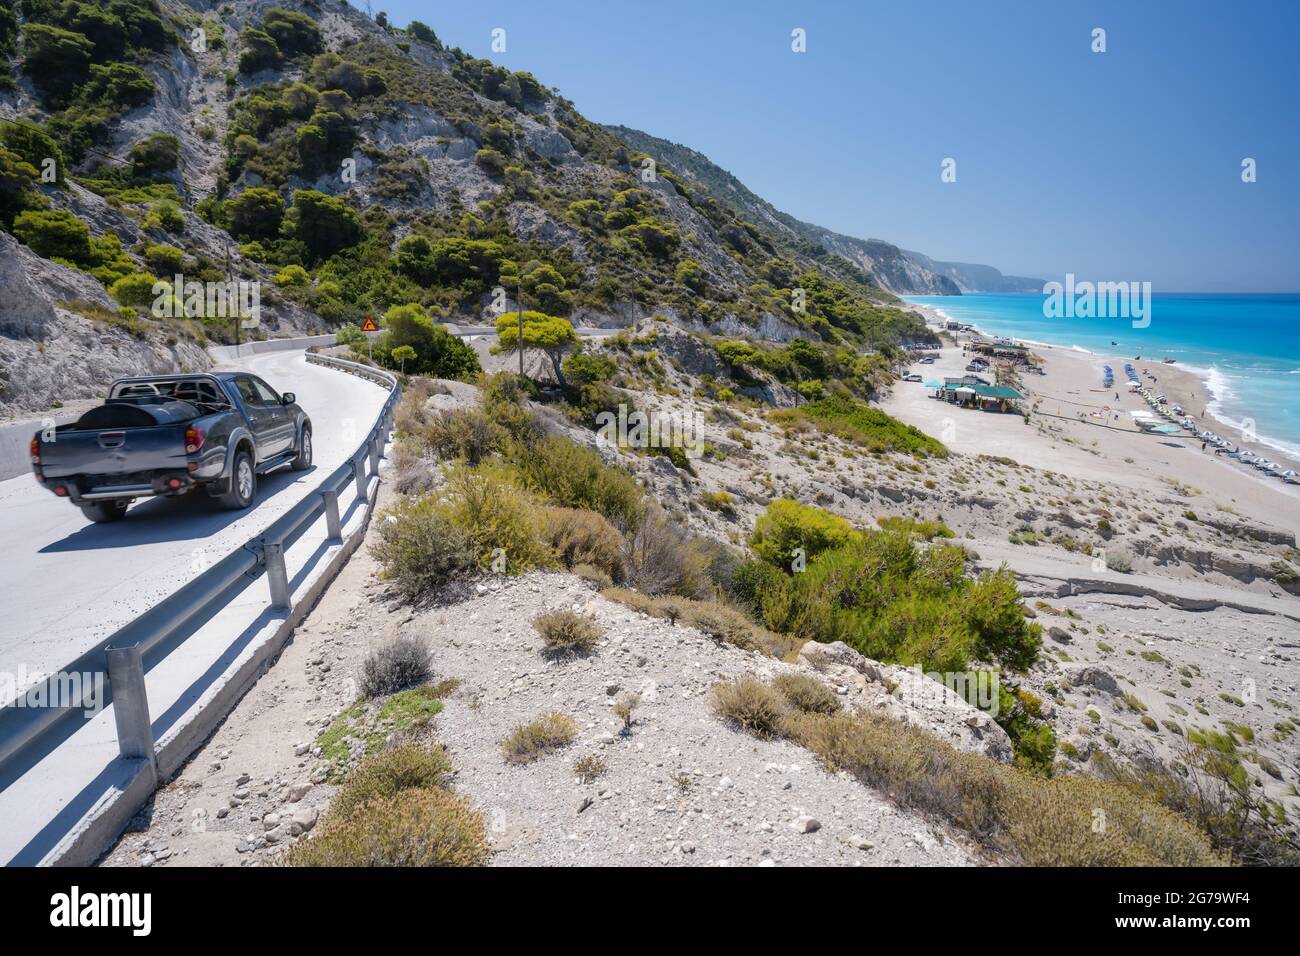 Tourist car on the coast road to beach on Lefkada Ionian island, Greece Stock Photo